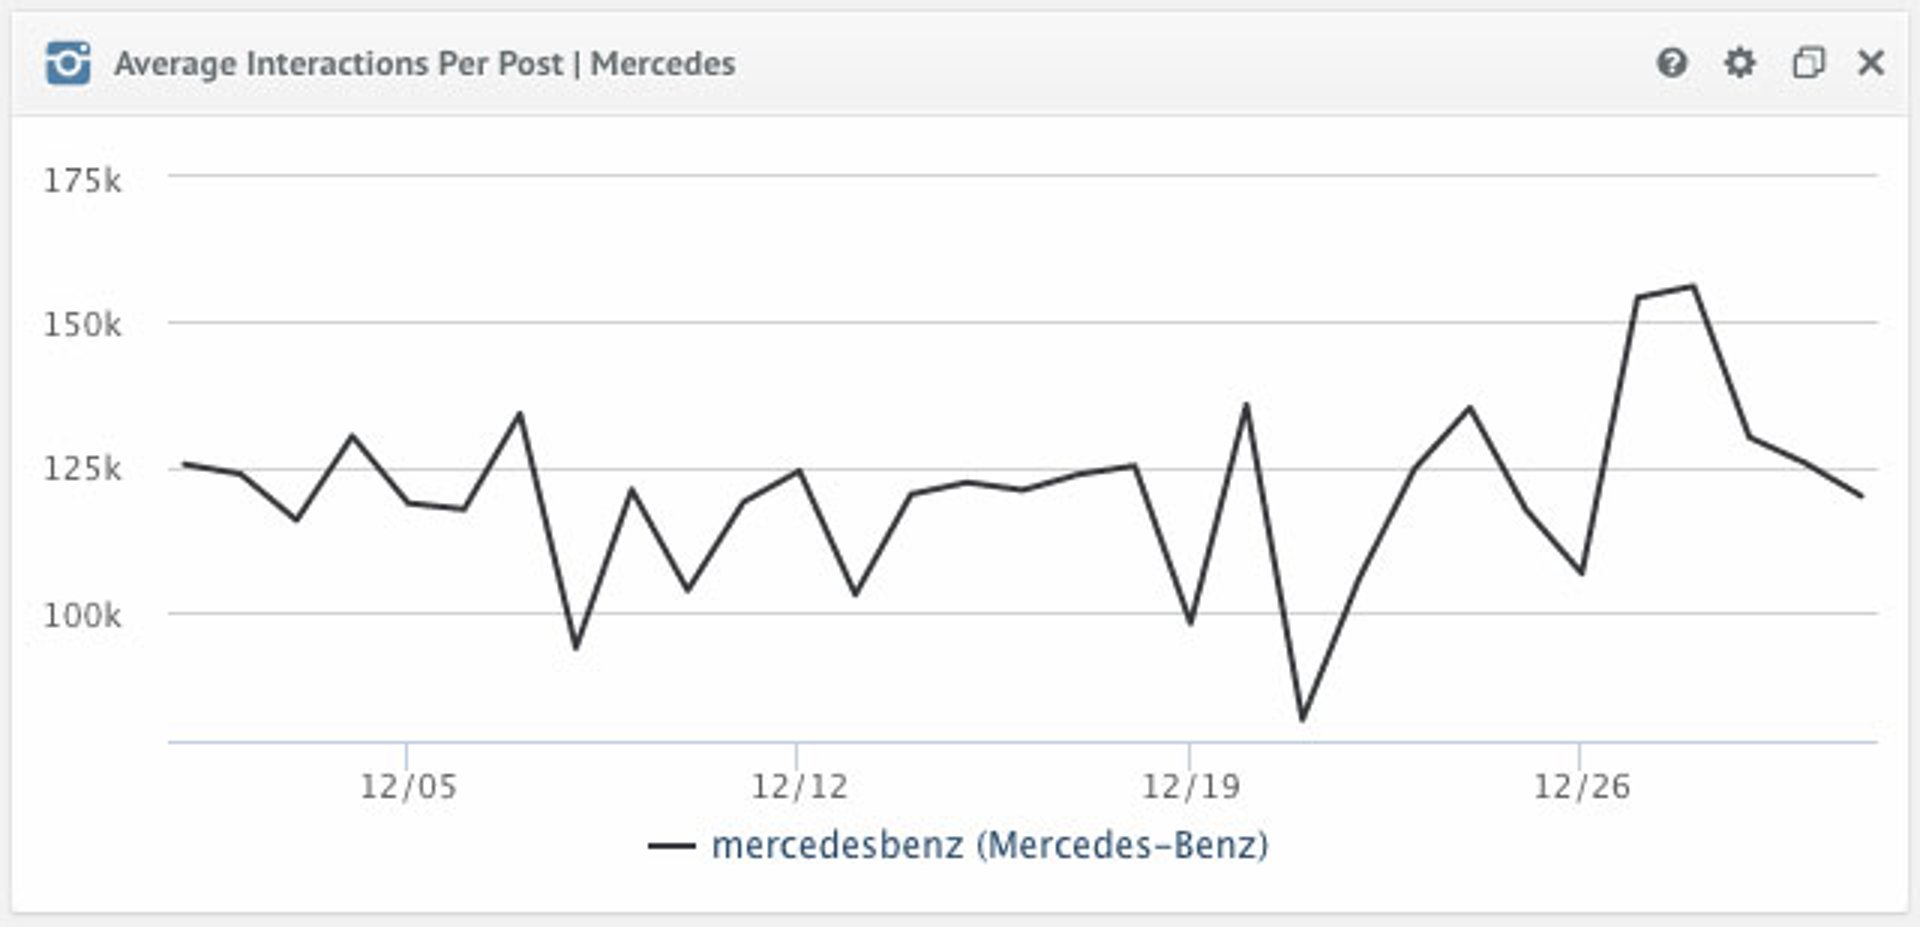 Average Interactions Per Post Mercedes